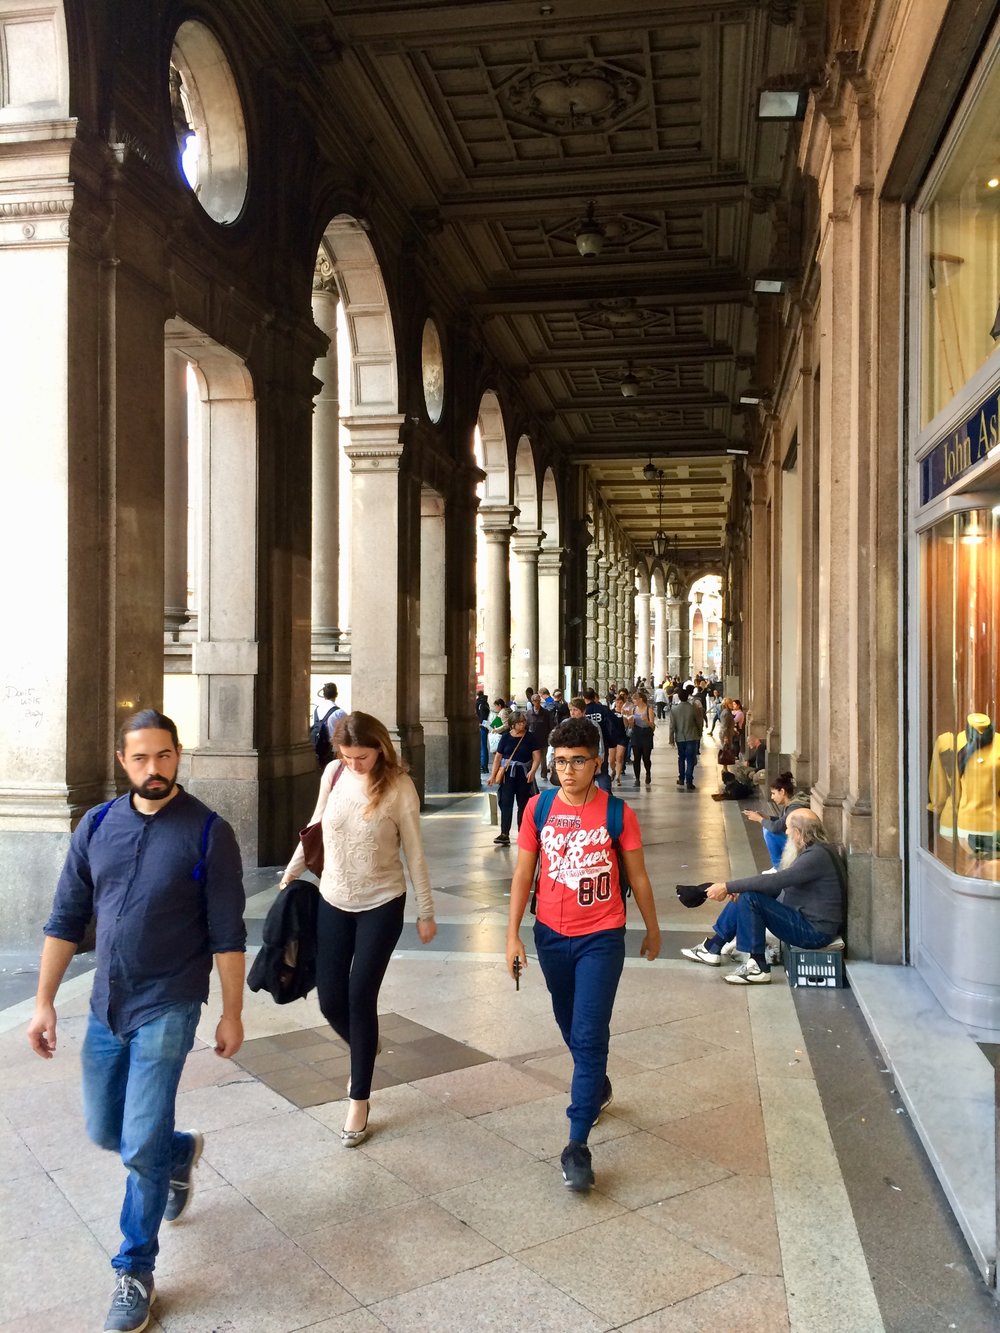 Bologna - “Pedestrians Rule”